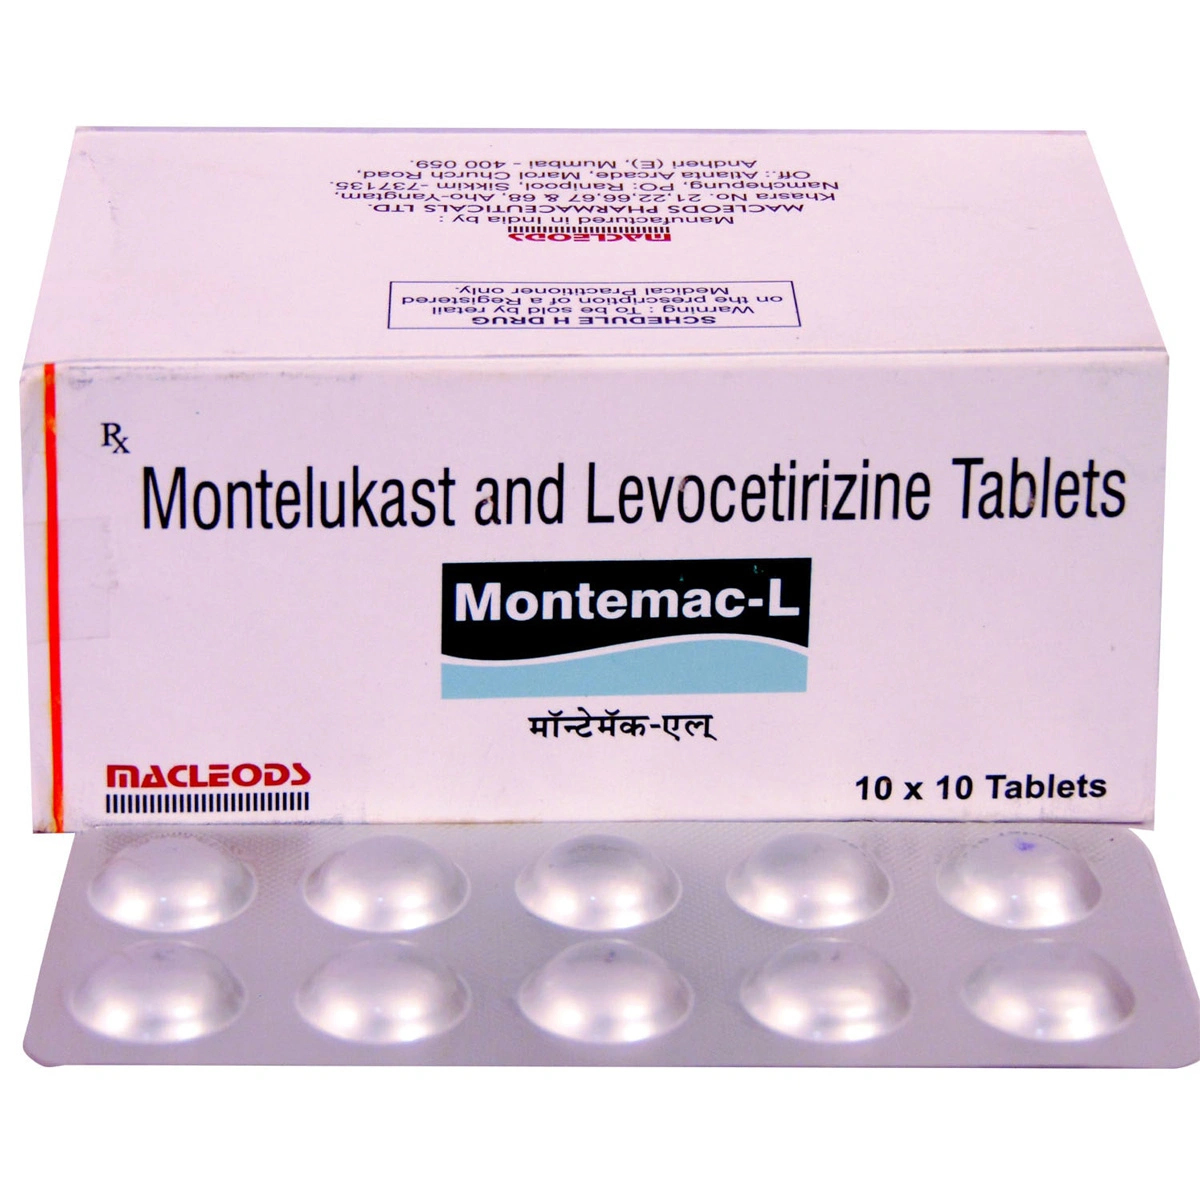 montemac-l-tablet